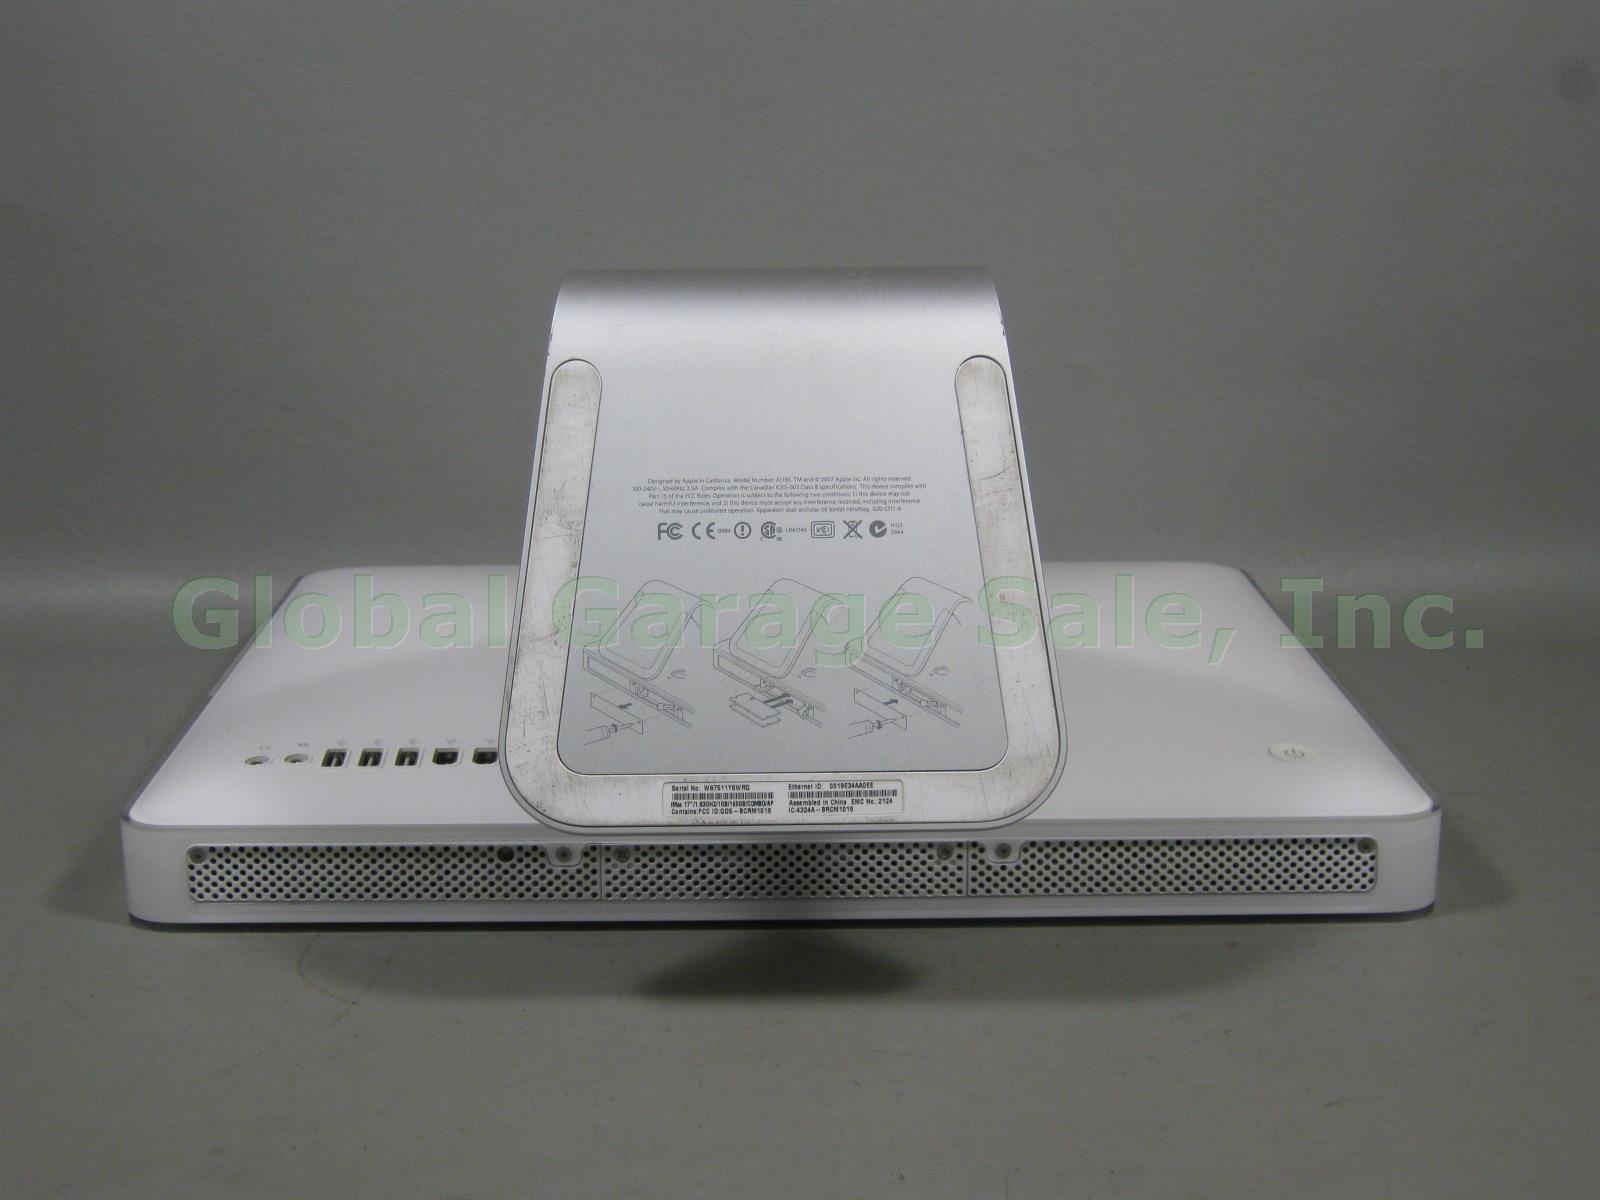 Apple 17" iMac A1195 Intel Core 2 Duo 1.83GHz 1GB 160GB Combo W/ Keyboard Mouse 7